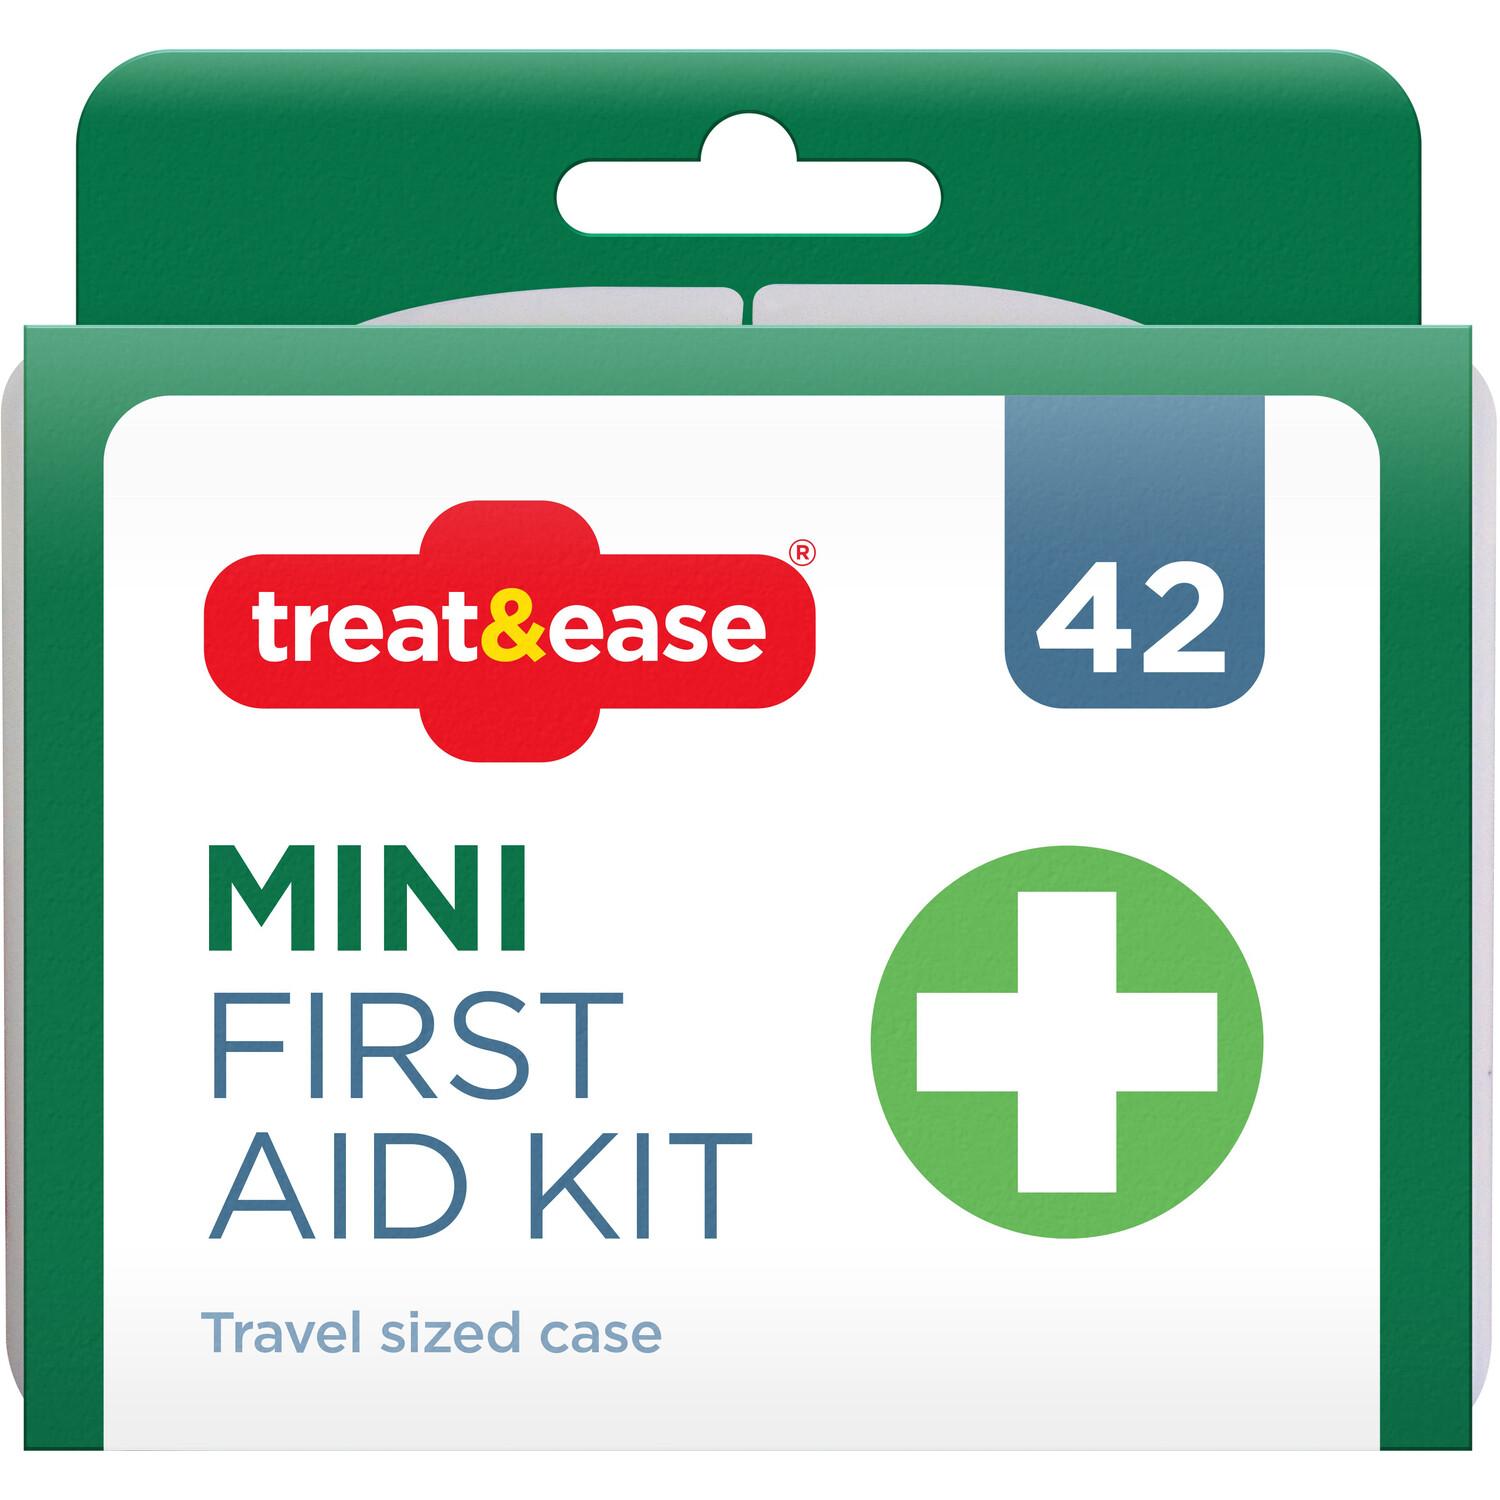 Mini First Aid Kit Image